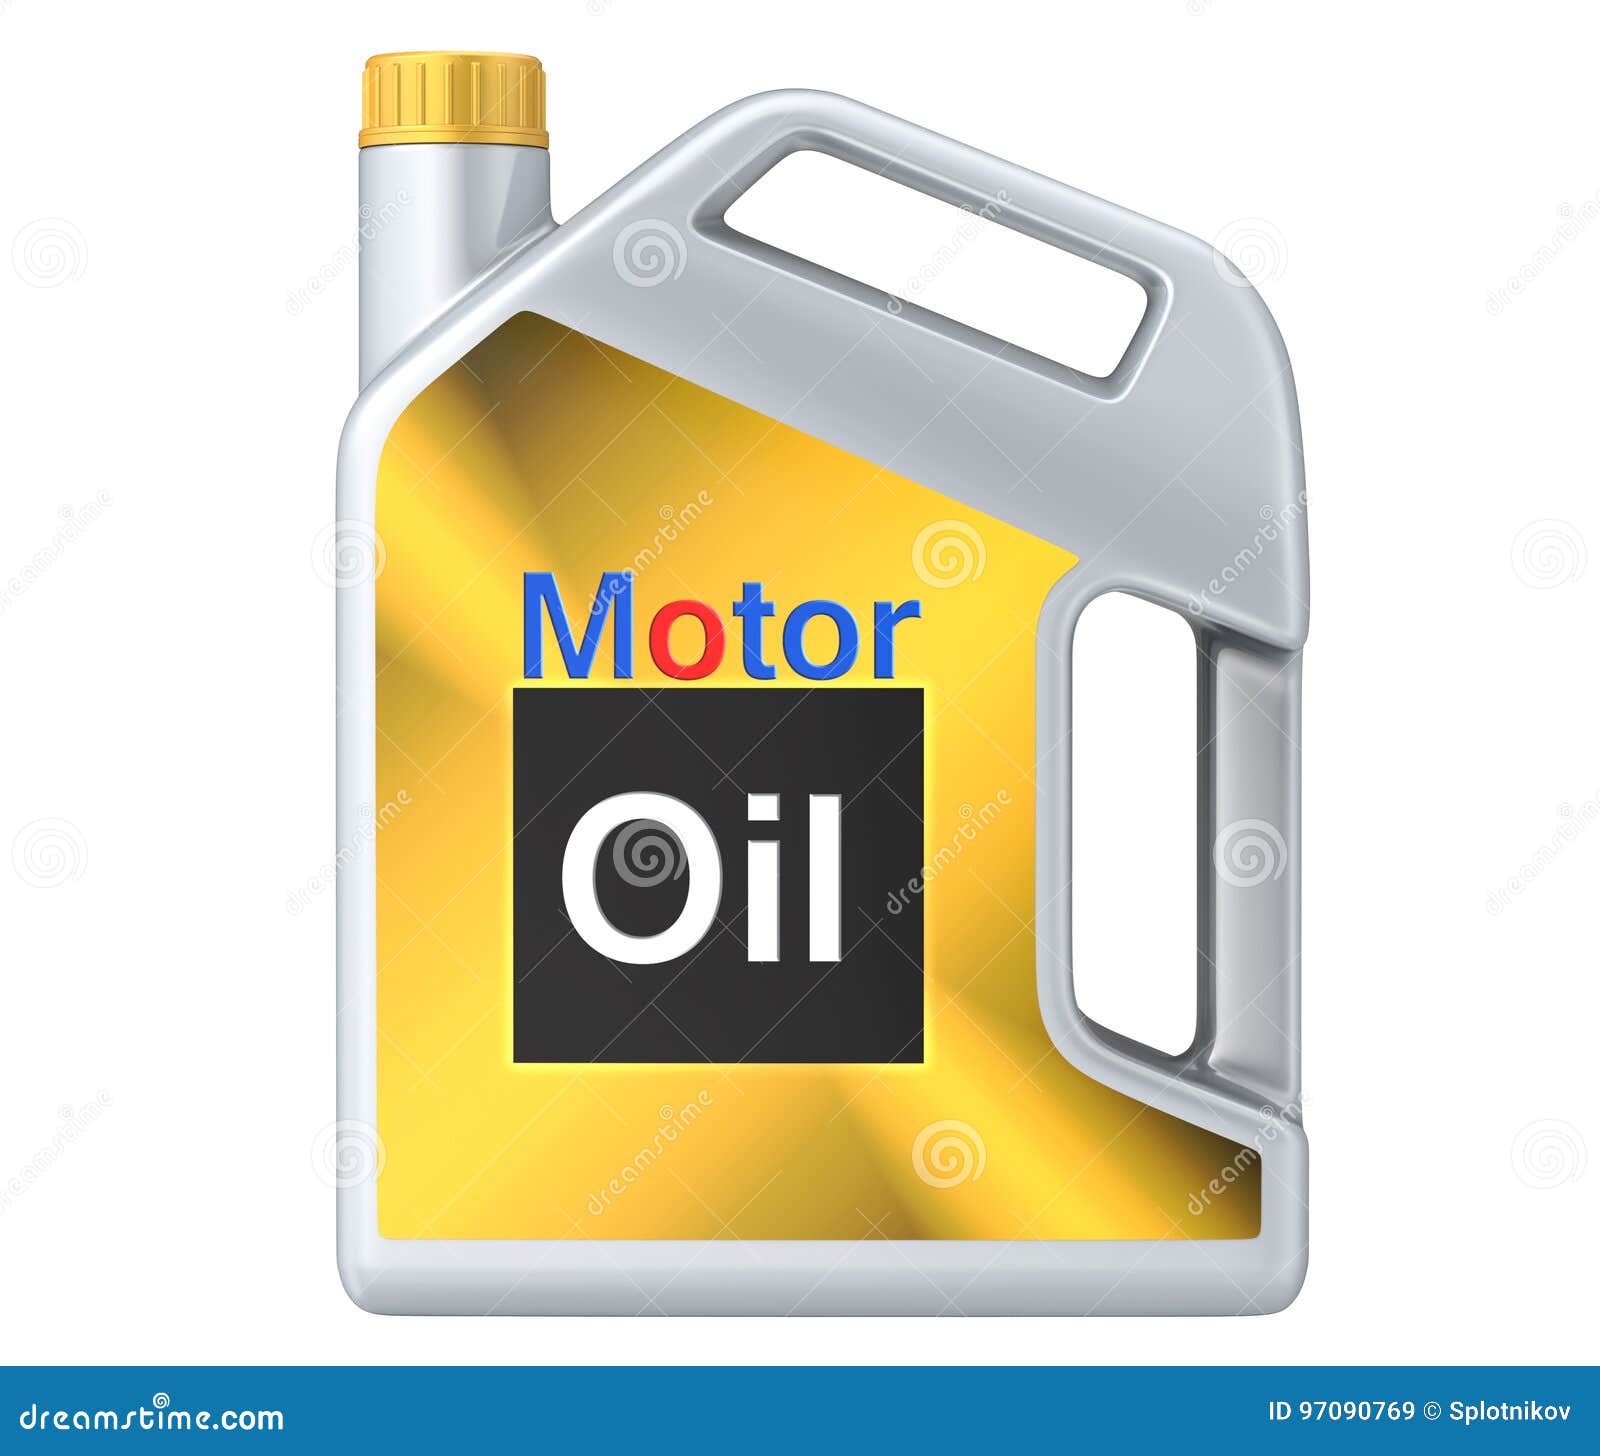 Can of motor oil stock illustration. Illustration of liquid - 97090769